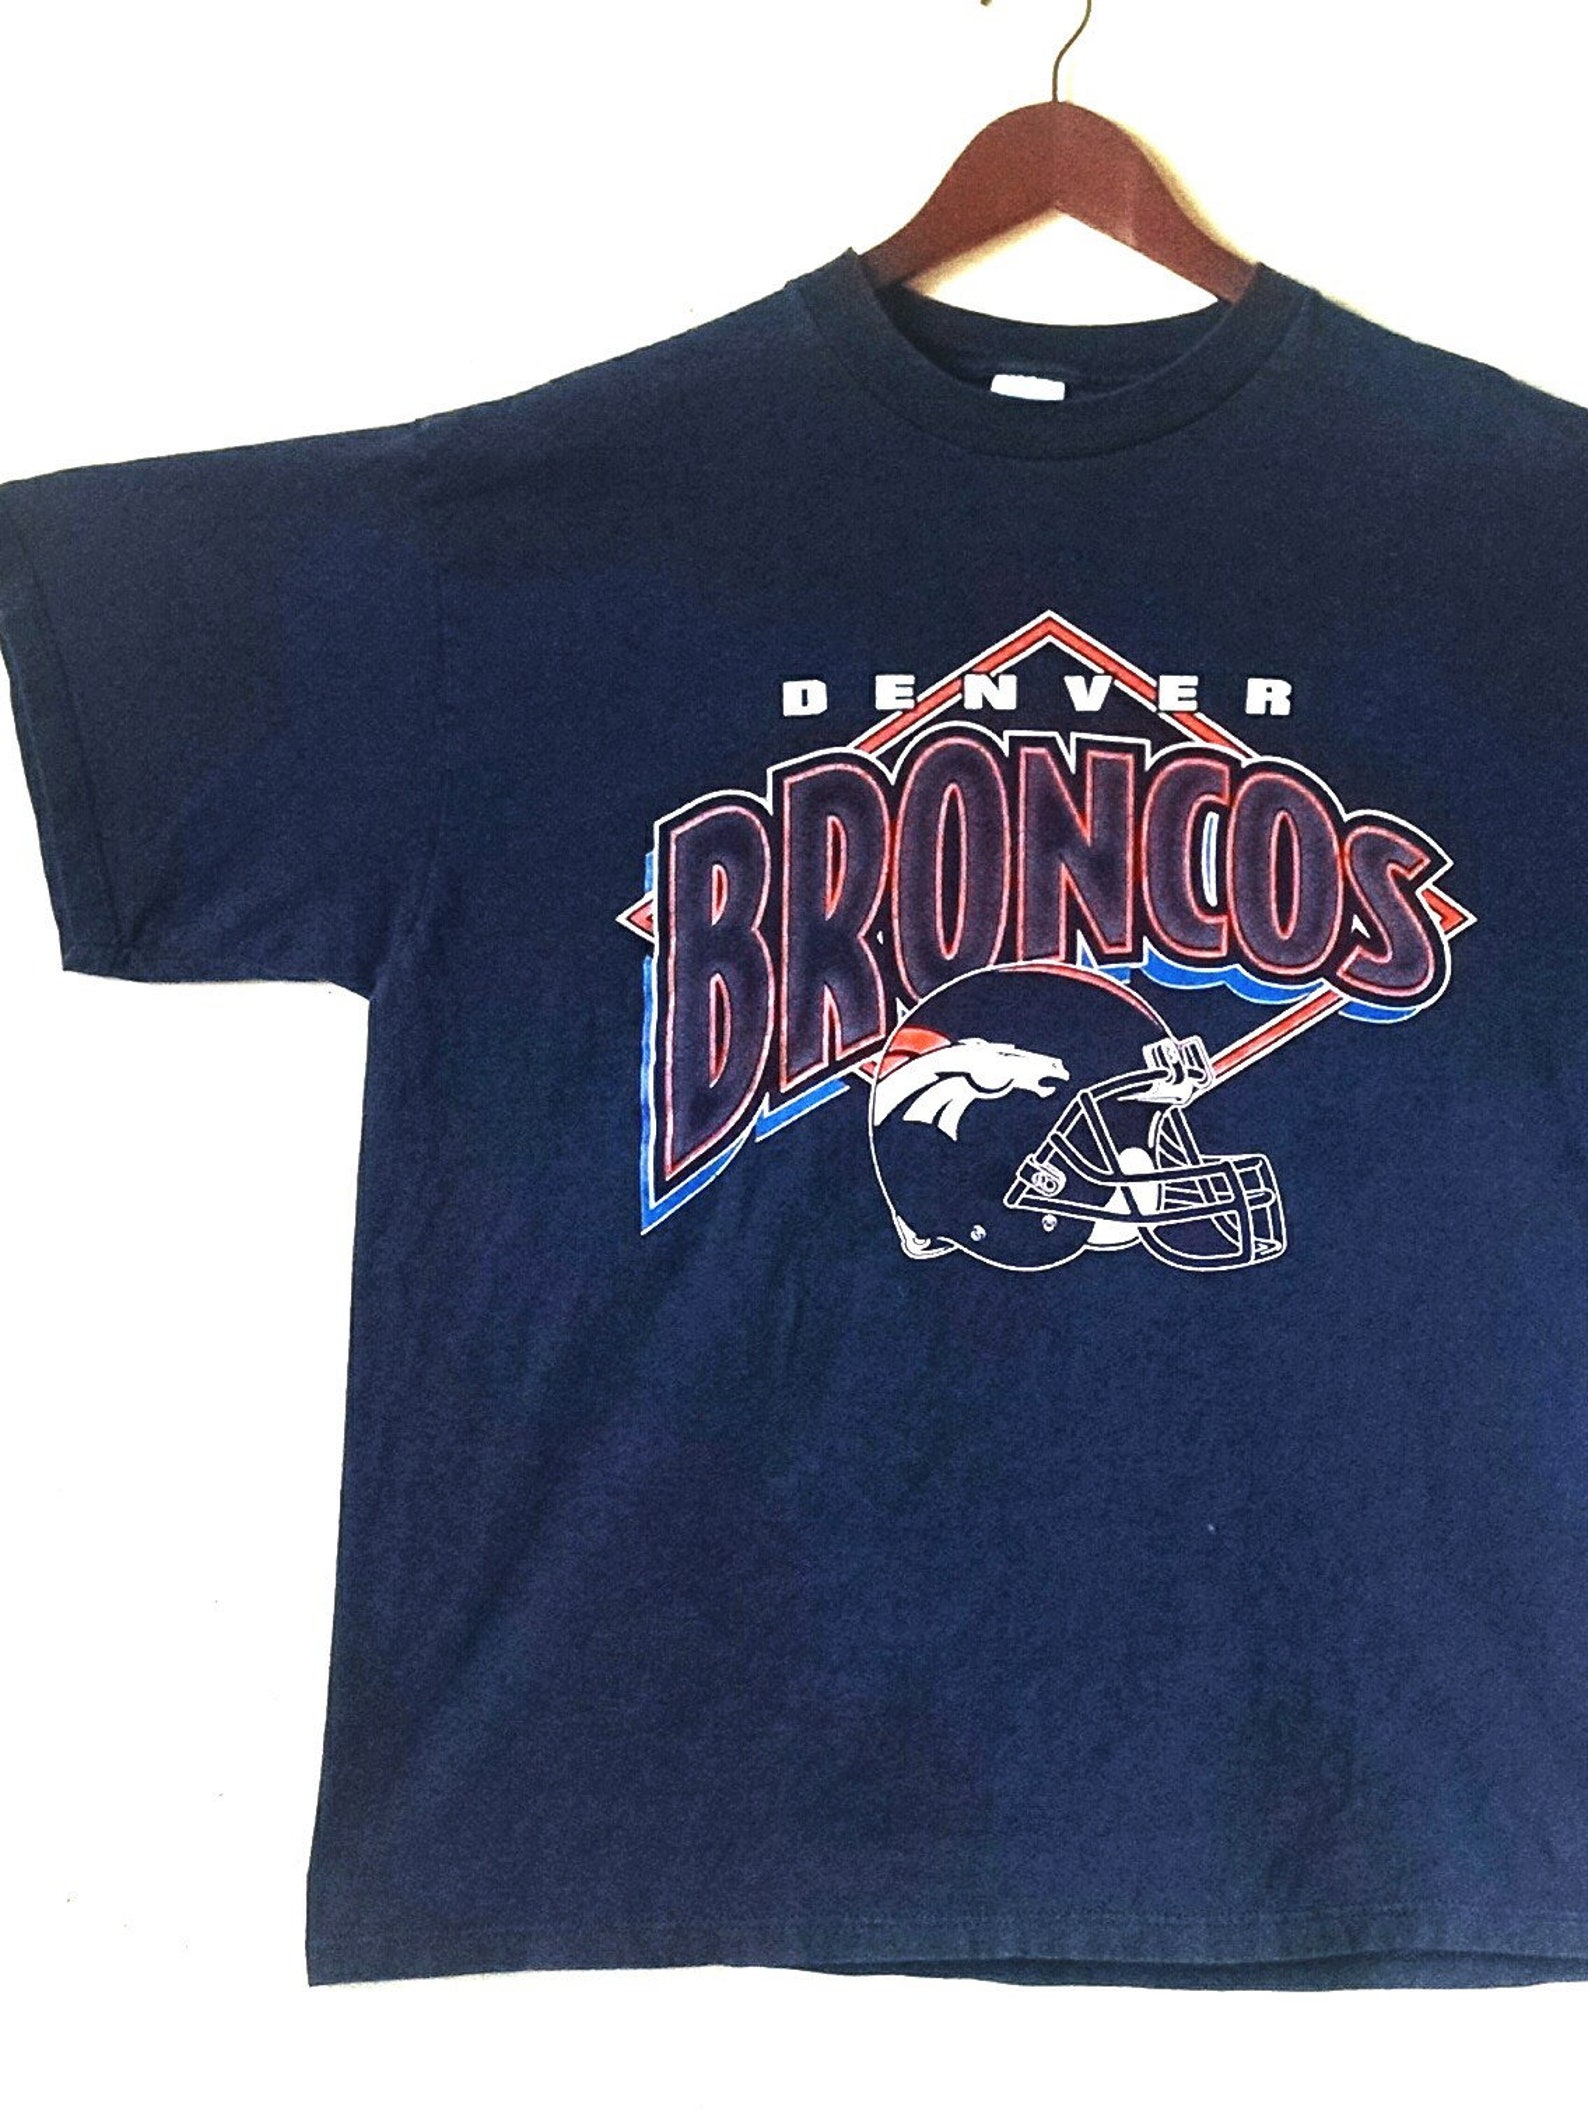 Vintage 1990s Denver Broncos Denver Colorado NFL football | Etsy